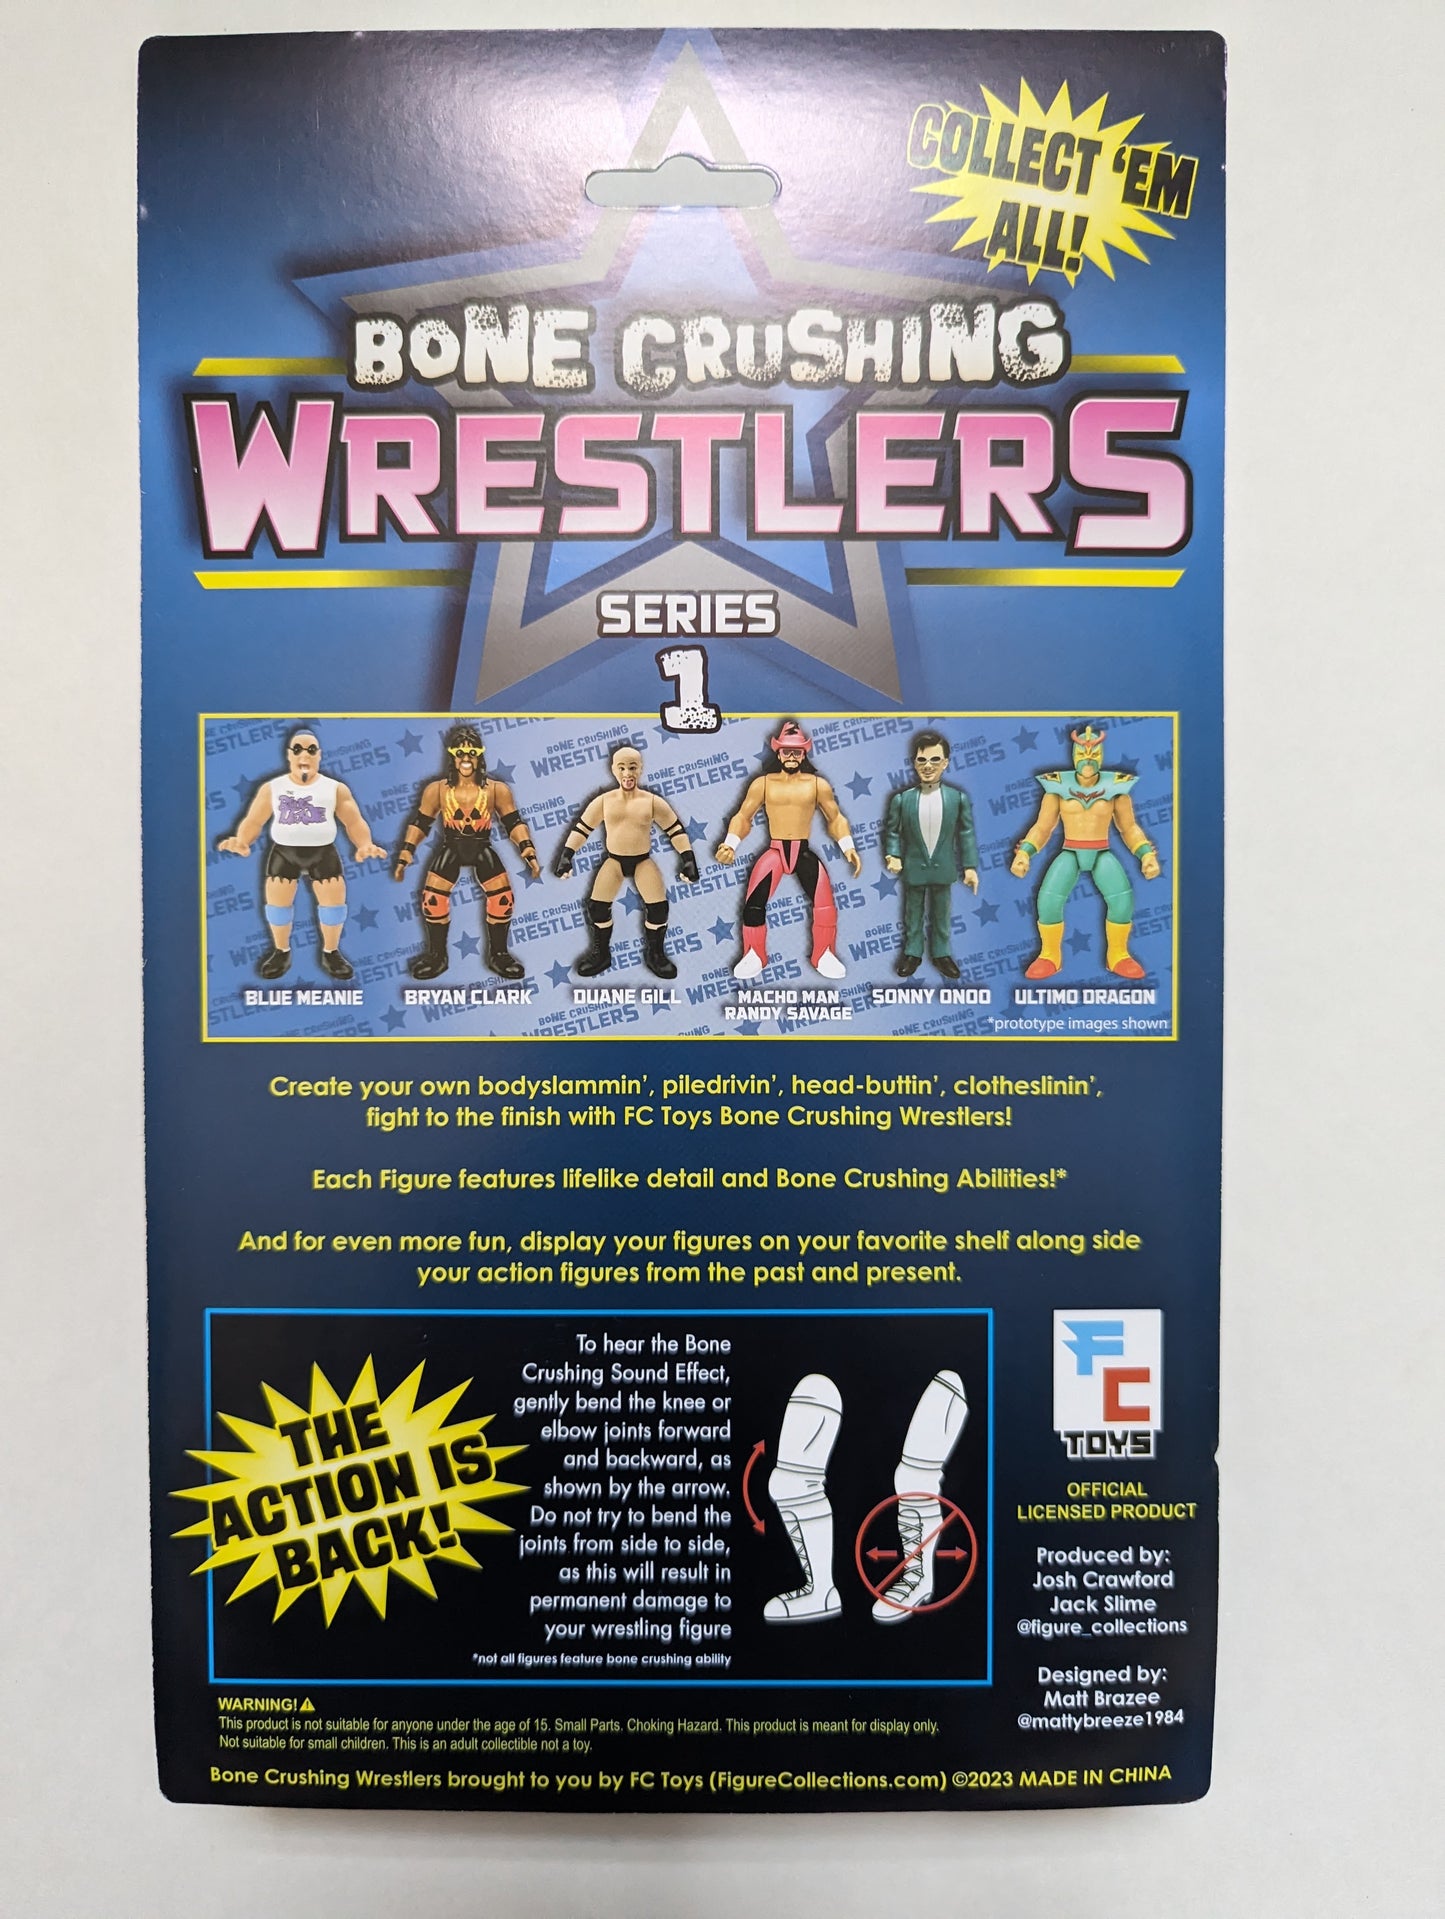 Figure Collections (FC) Bone Crushing Wrestlers (BCW) Bryan Clark